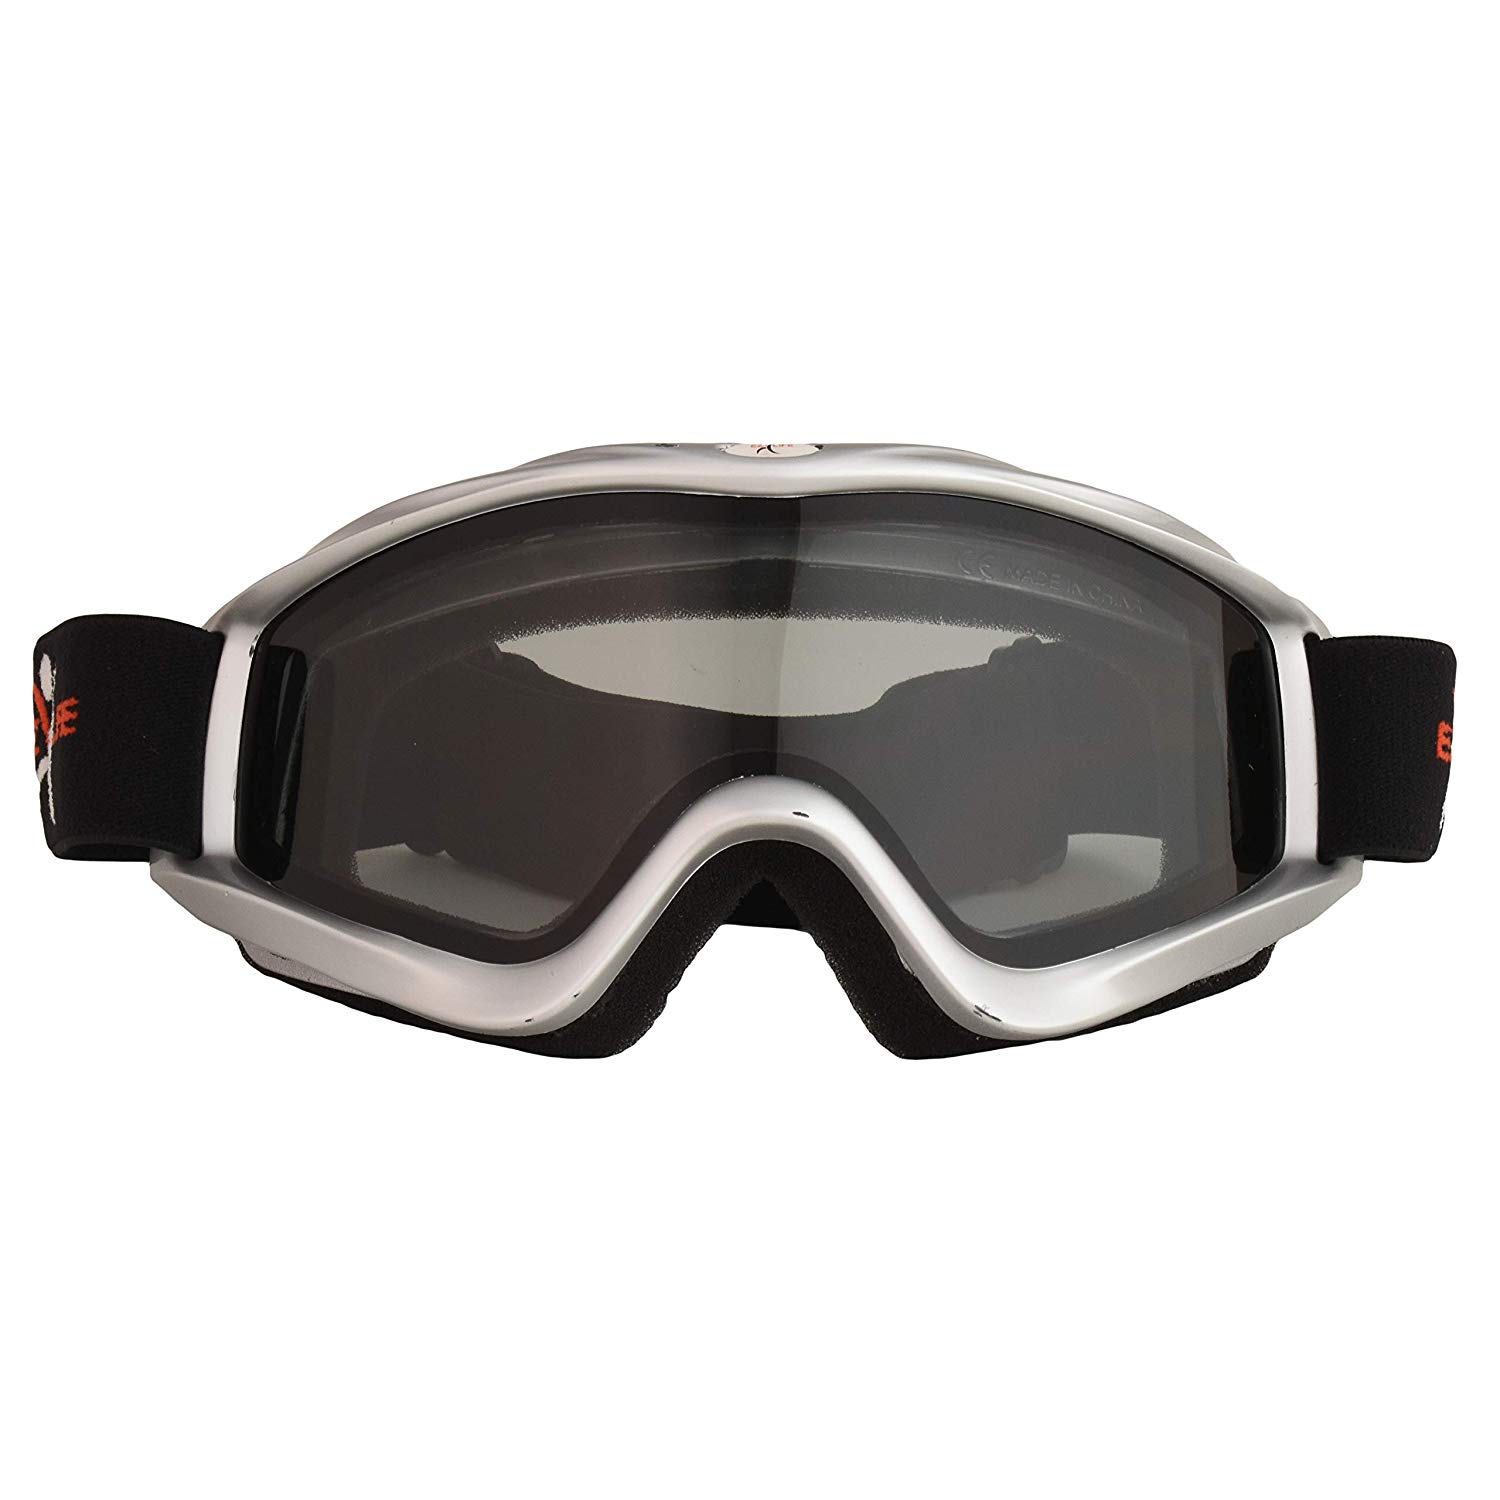 Kids Ski Goggles-Snowboarding Sports Goggles Glasses - for Youth & Kids - Anti-Fog (Smoke) - image 1 of 12